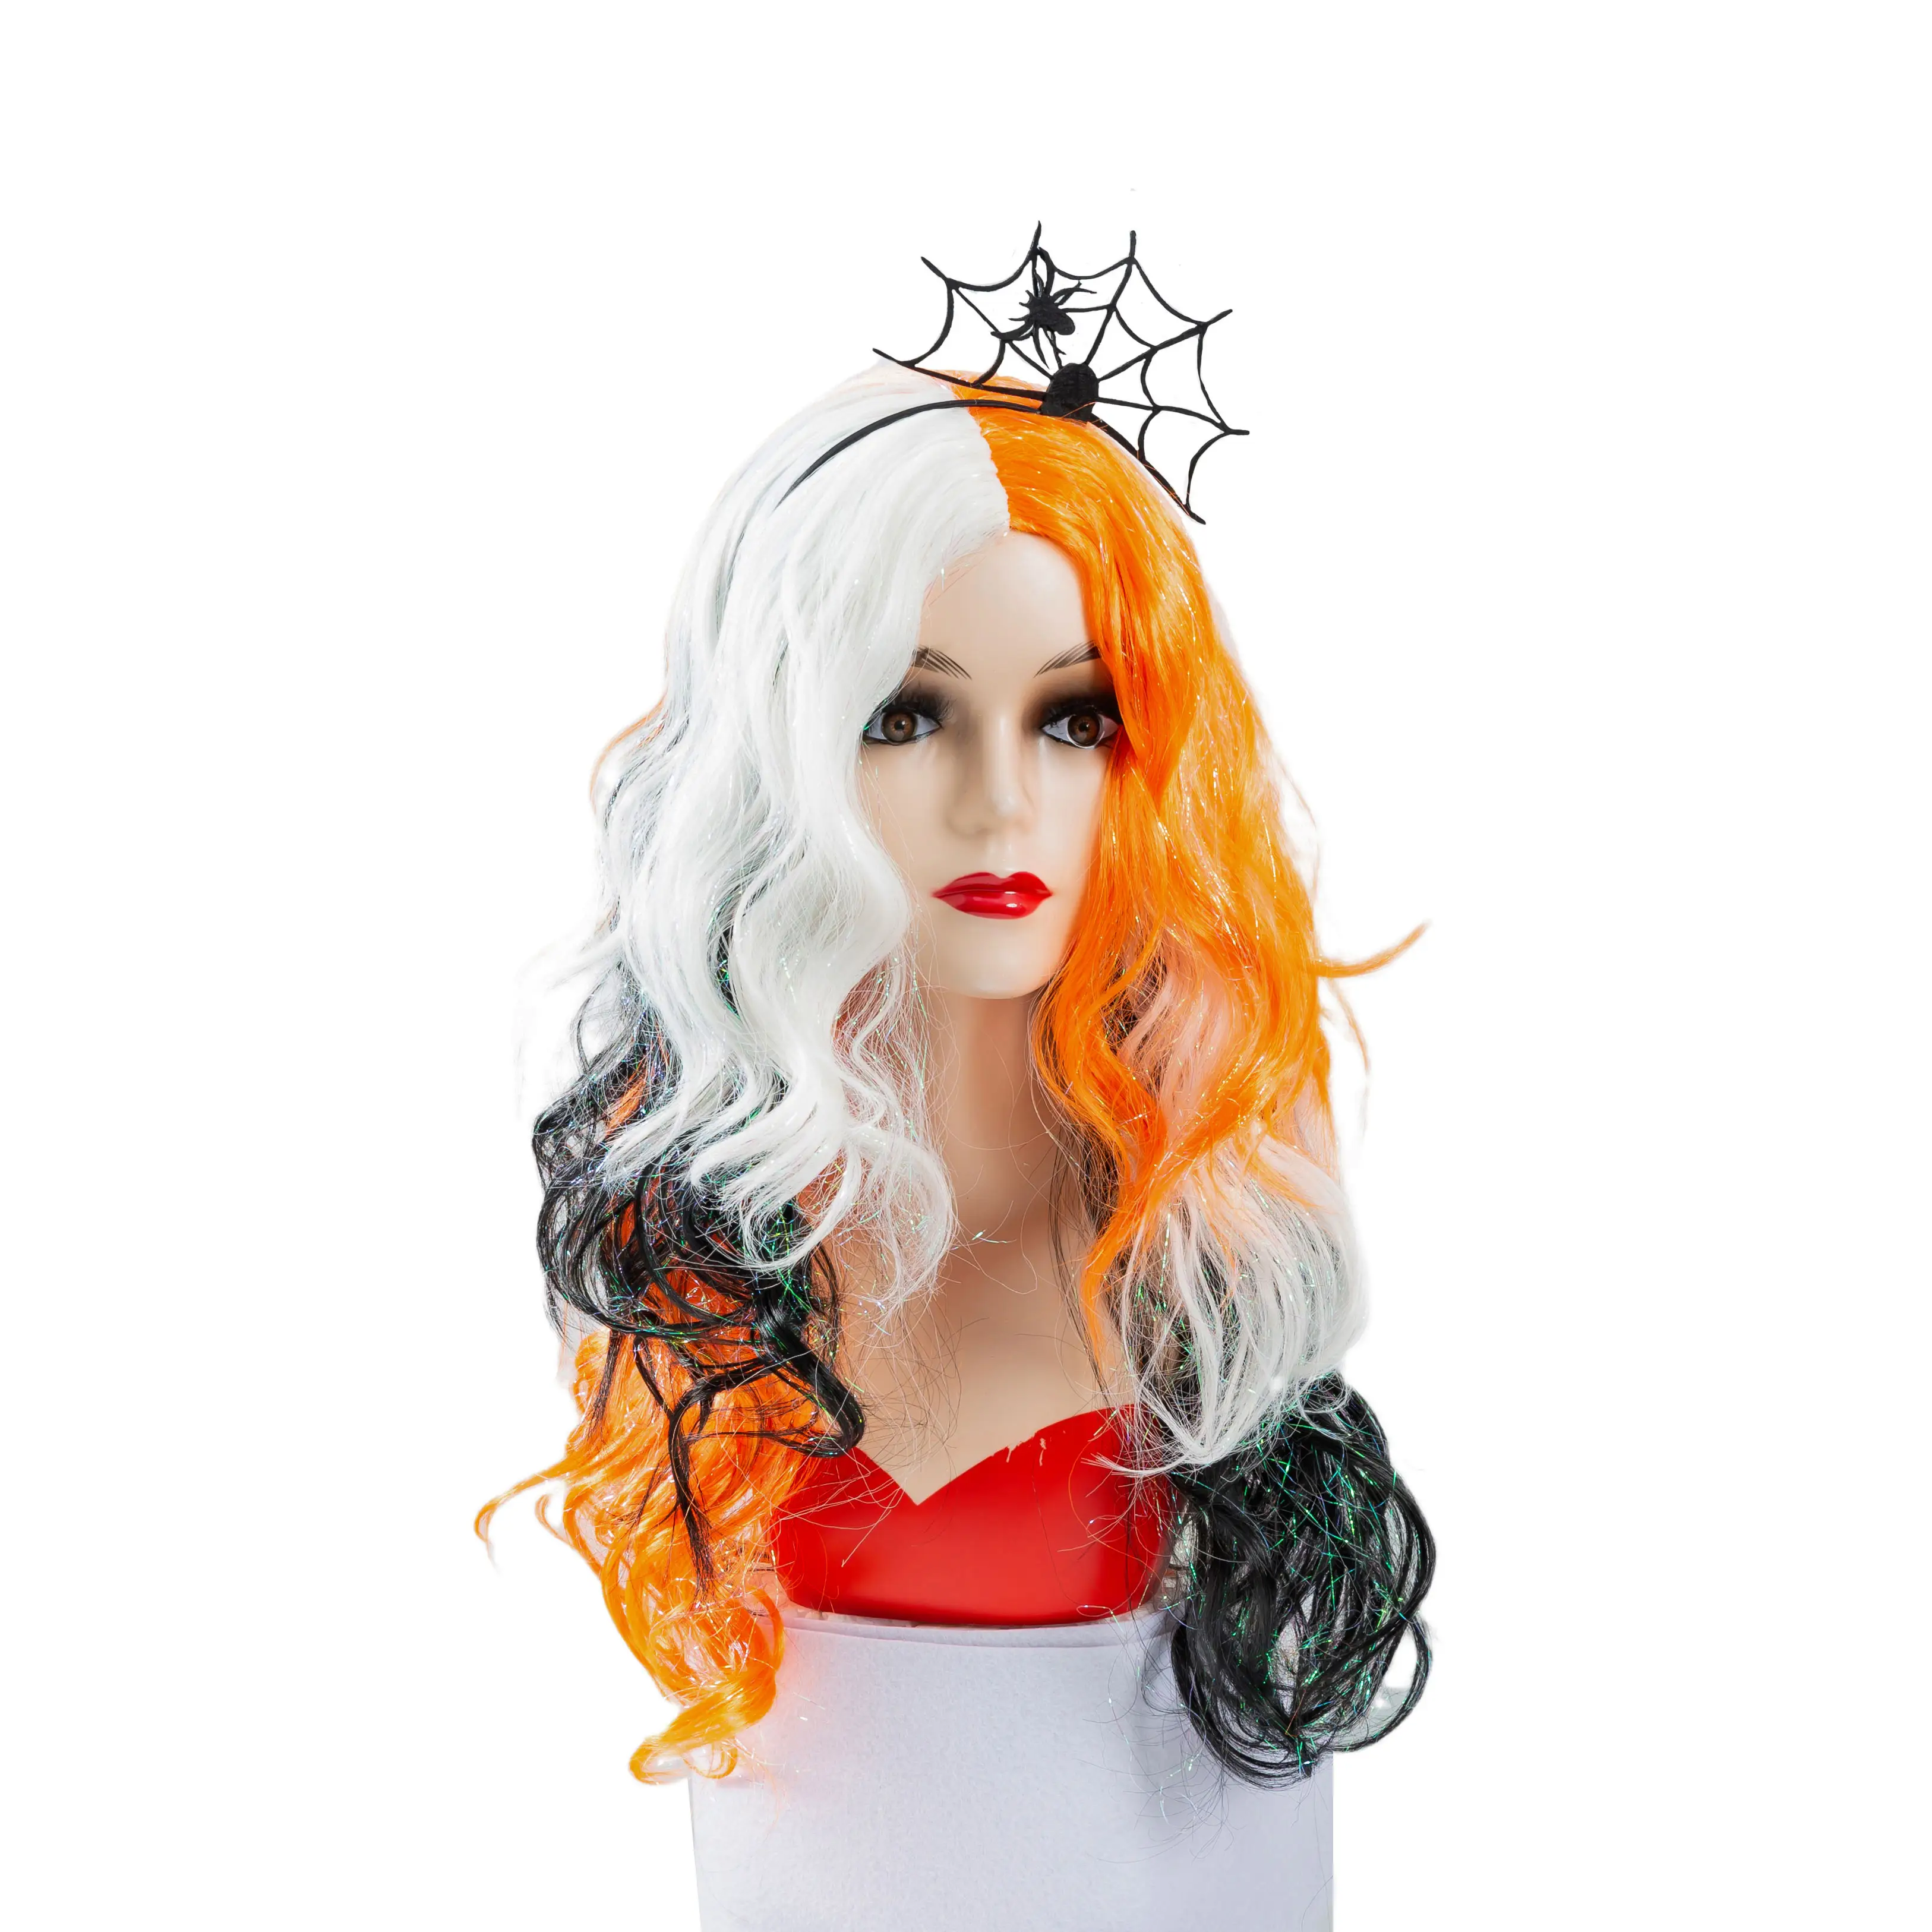 ANXIN peruca de Halloween de alta qualidade encaracolado estilo crespo ondulação corporal multicolorida peruca cosplay com acessórios de cabelo